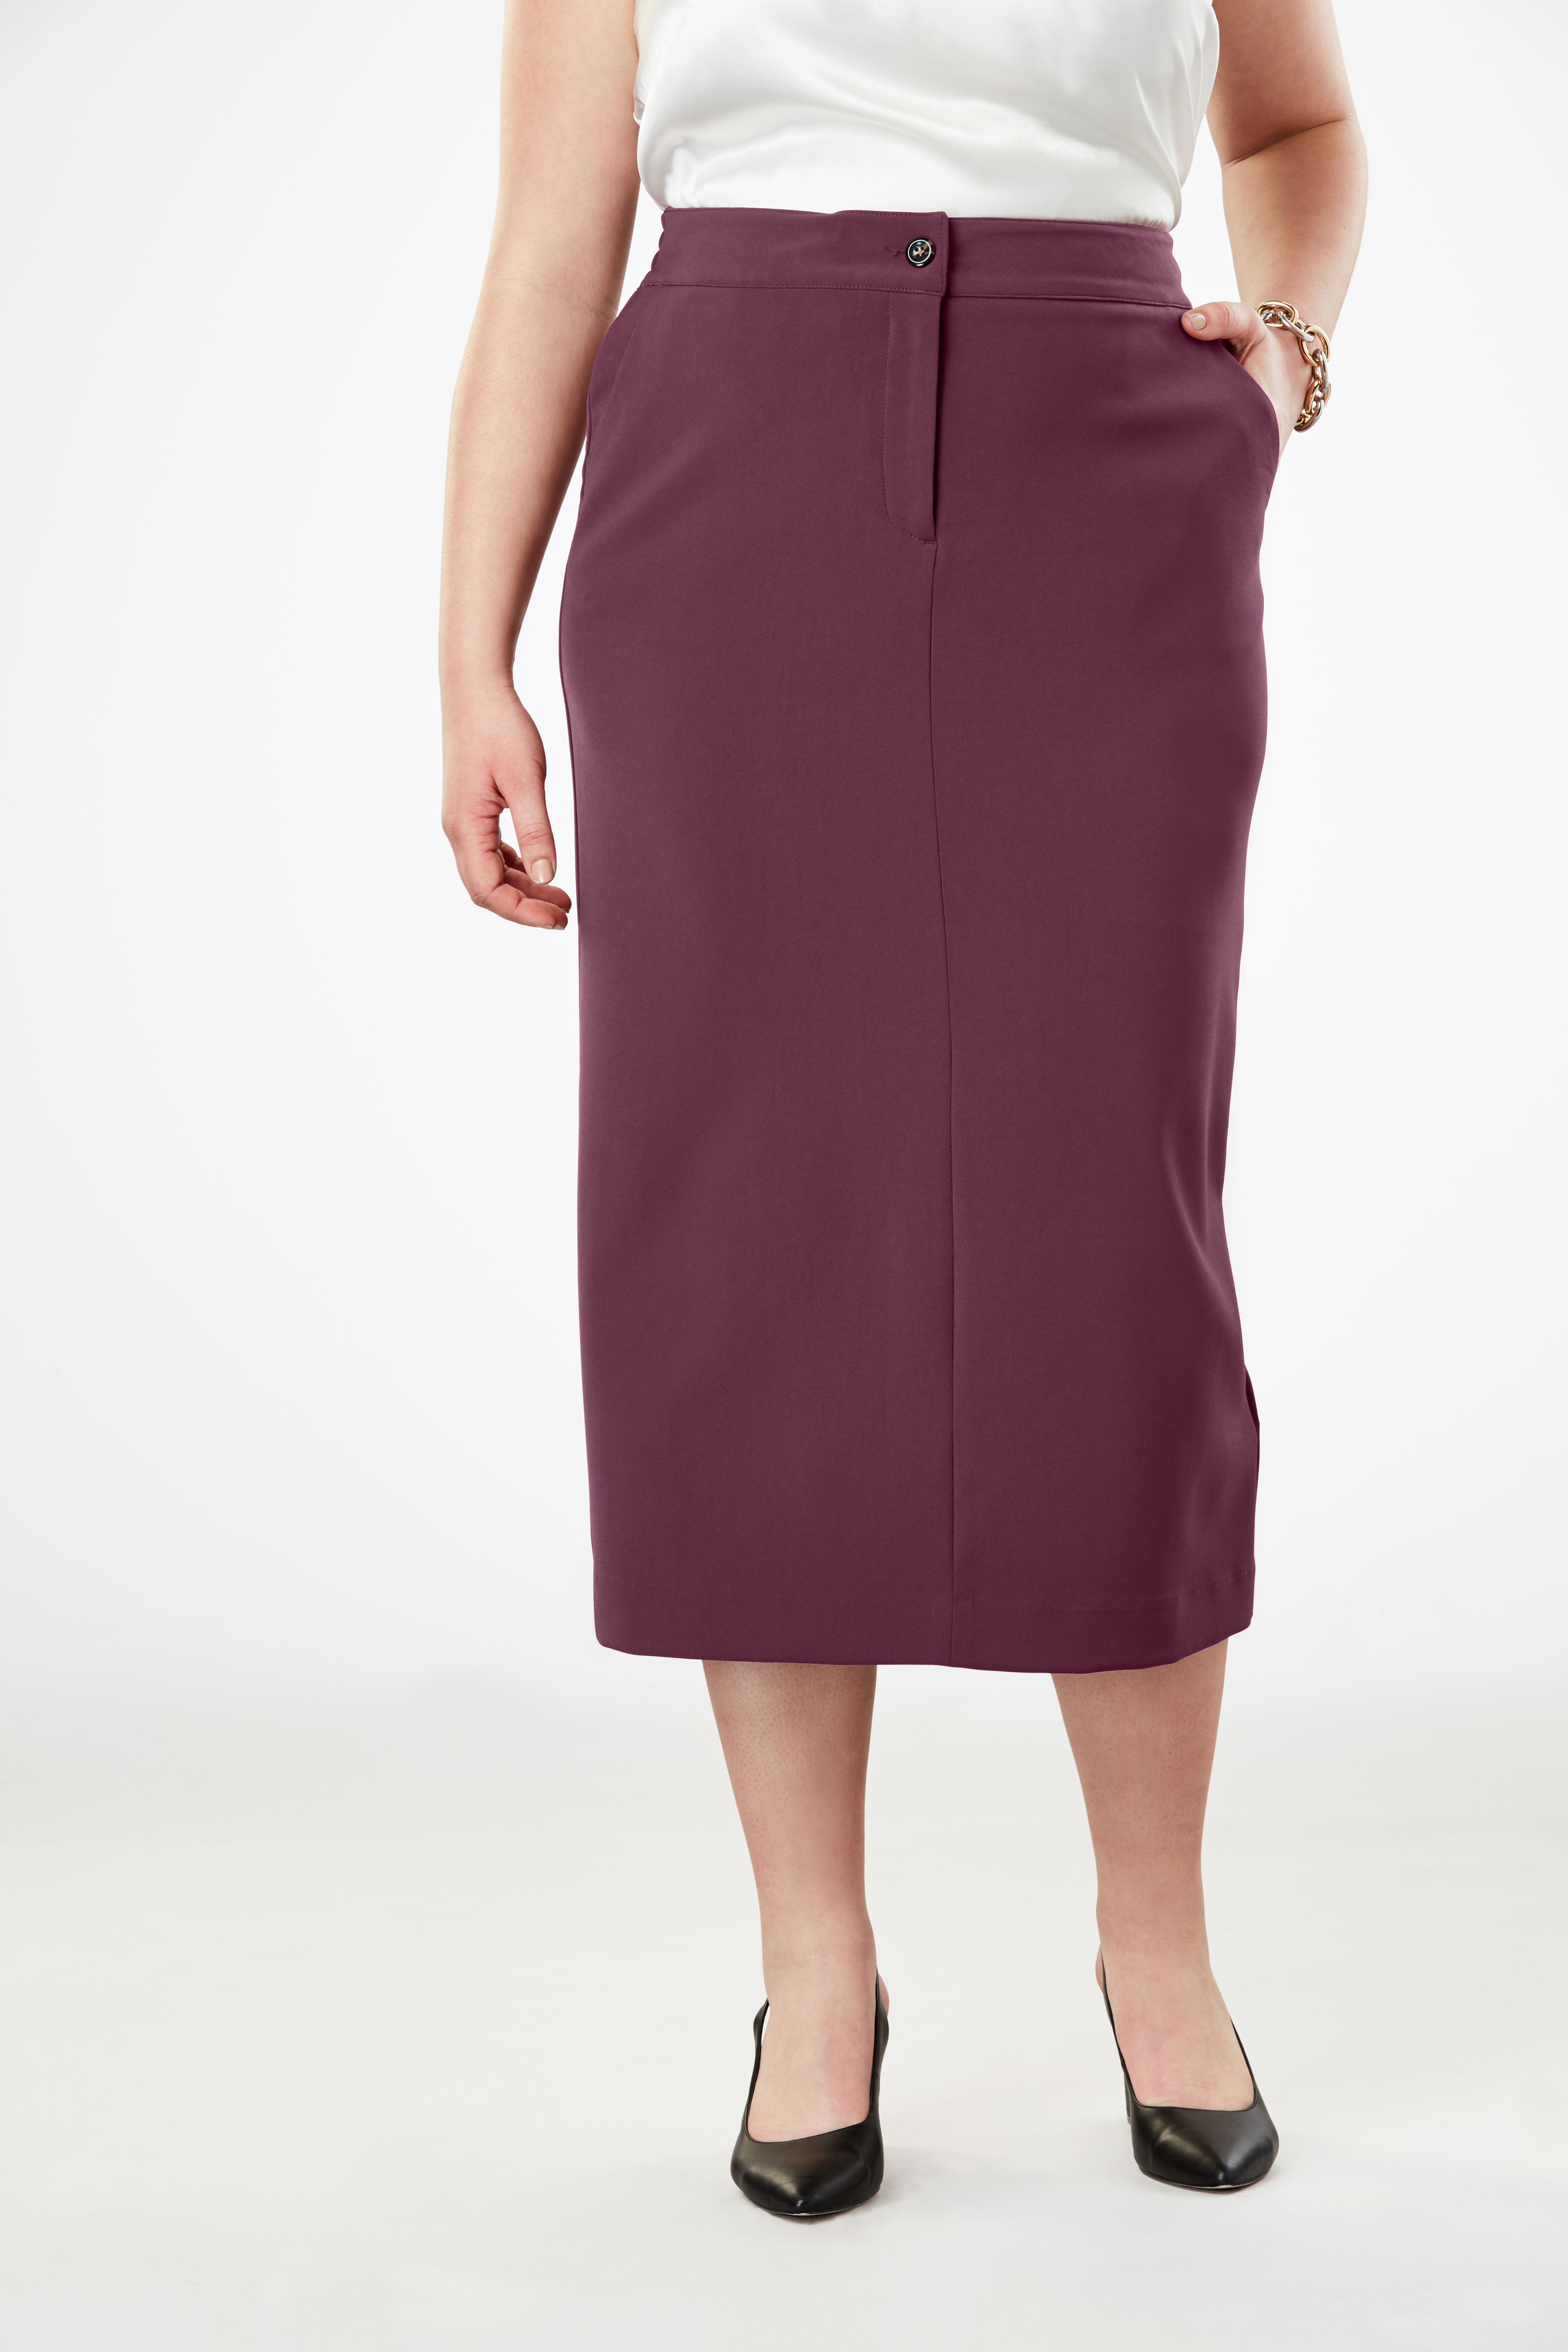 Tummy Control Bi-Stretch Midi Skirt | Plus Size Skirts | Woman Within